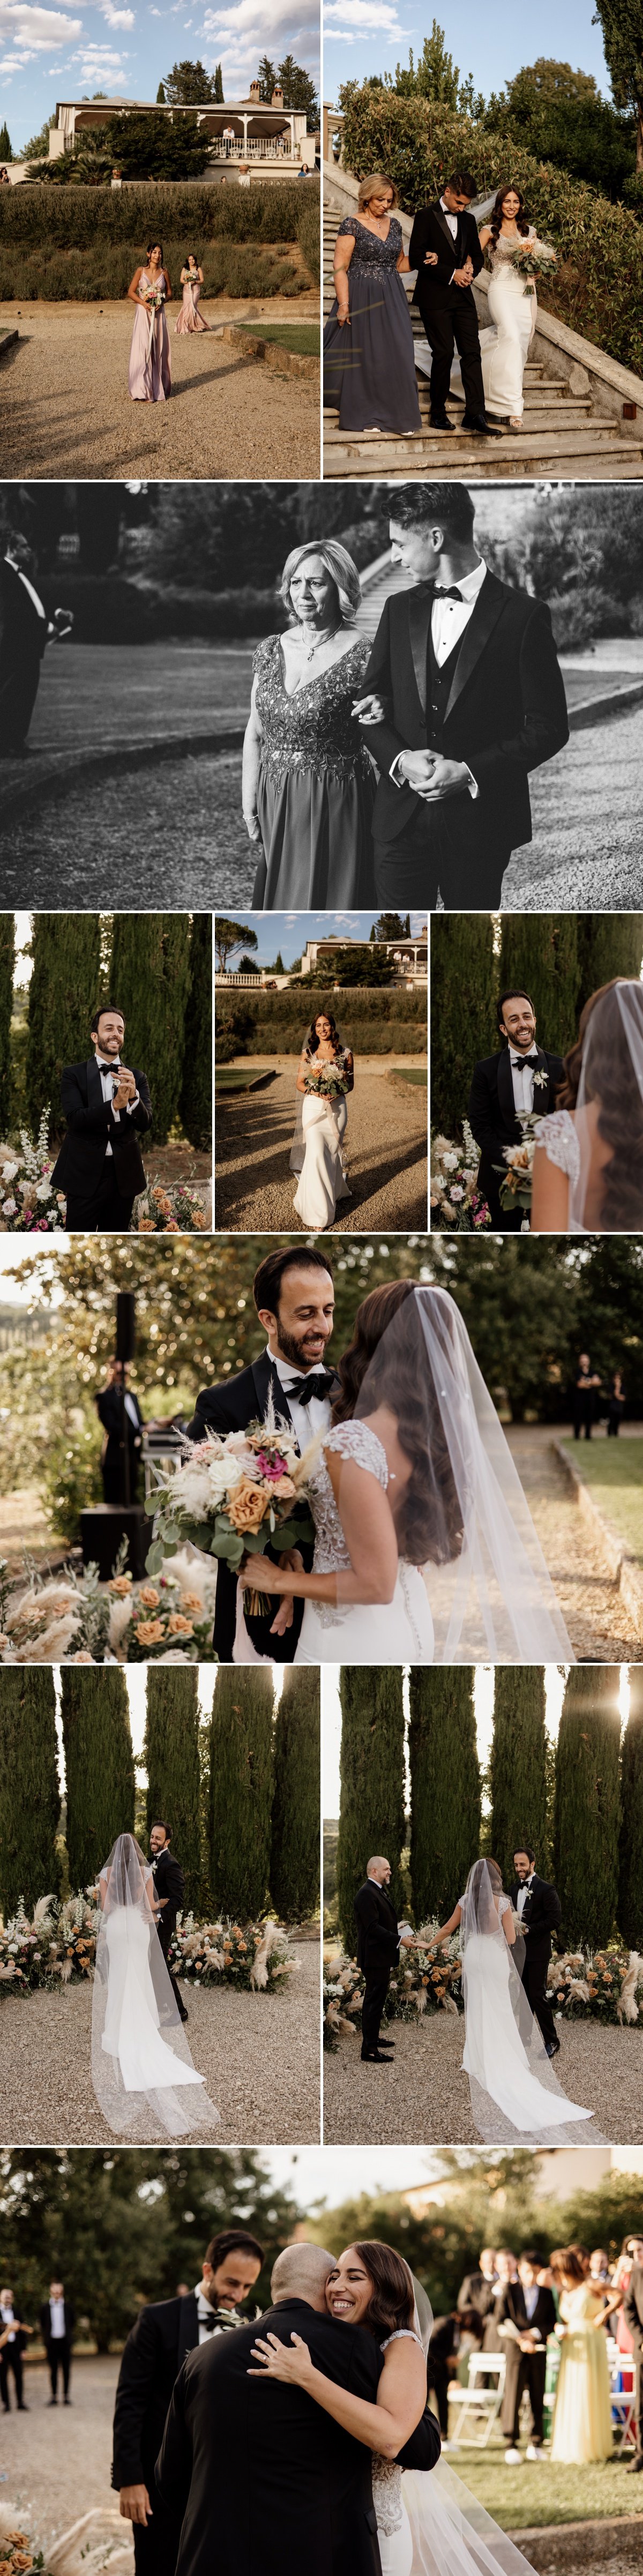 tuscany-wedding-dallk-10.jpg